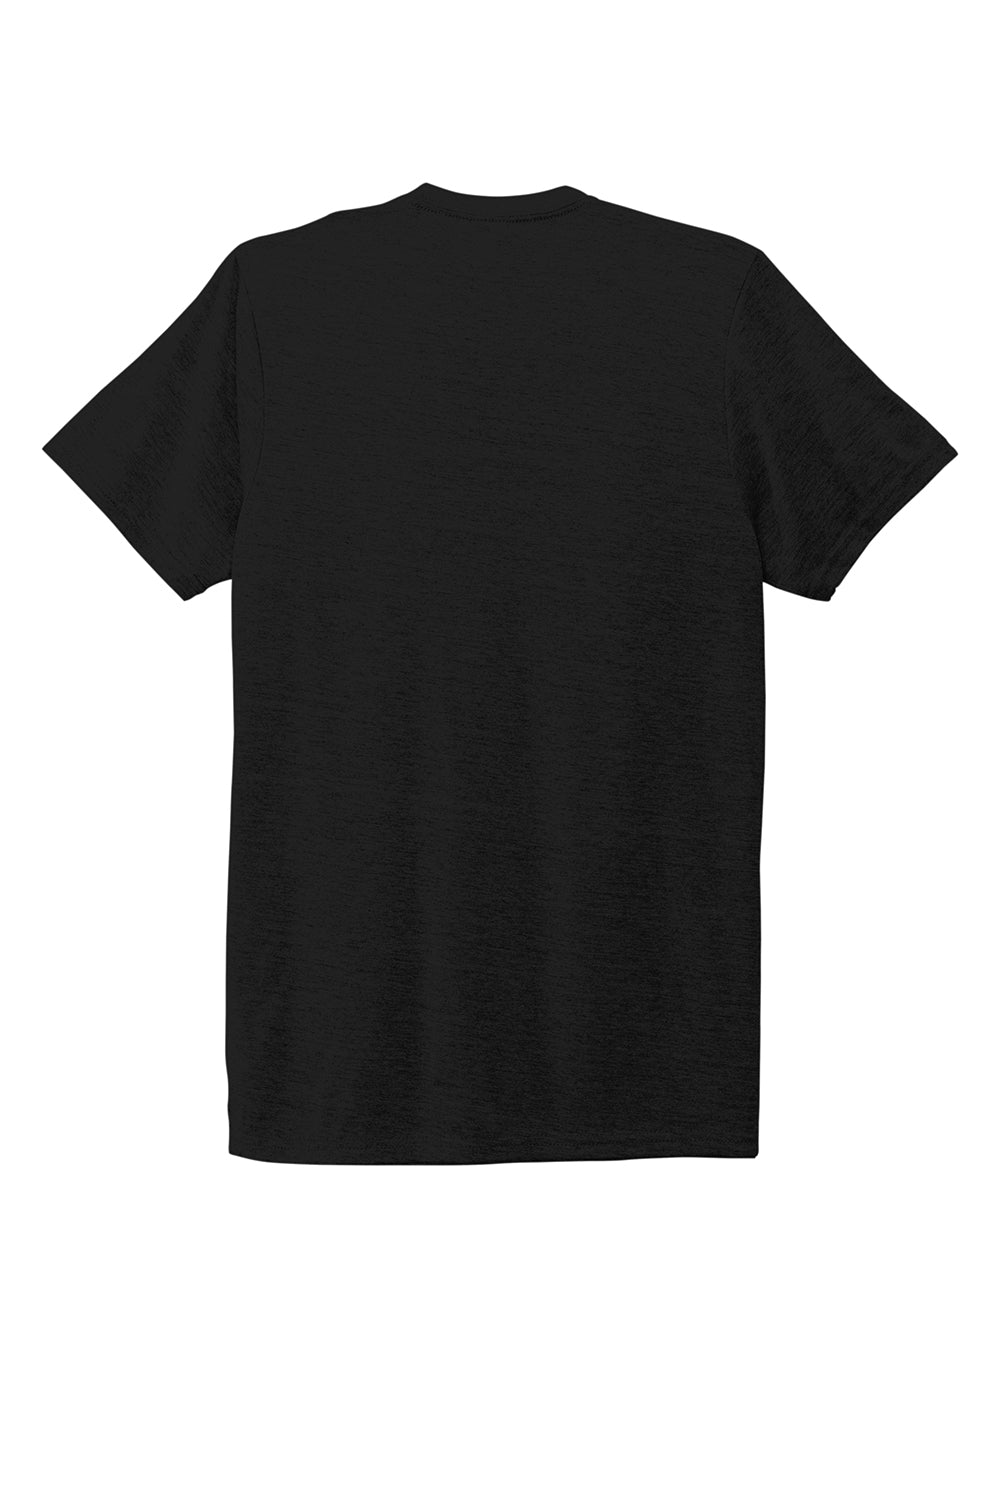 Allmade AL2004 Mens Short Sleeve Crewneck T-Shirt Deep Black Flat Back